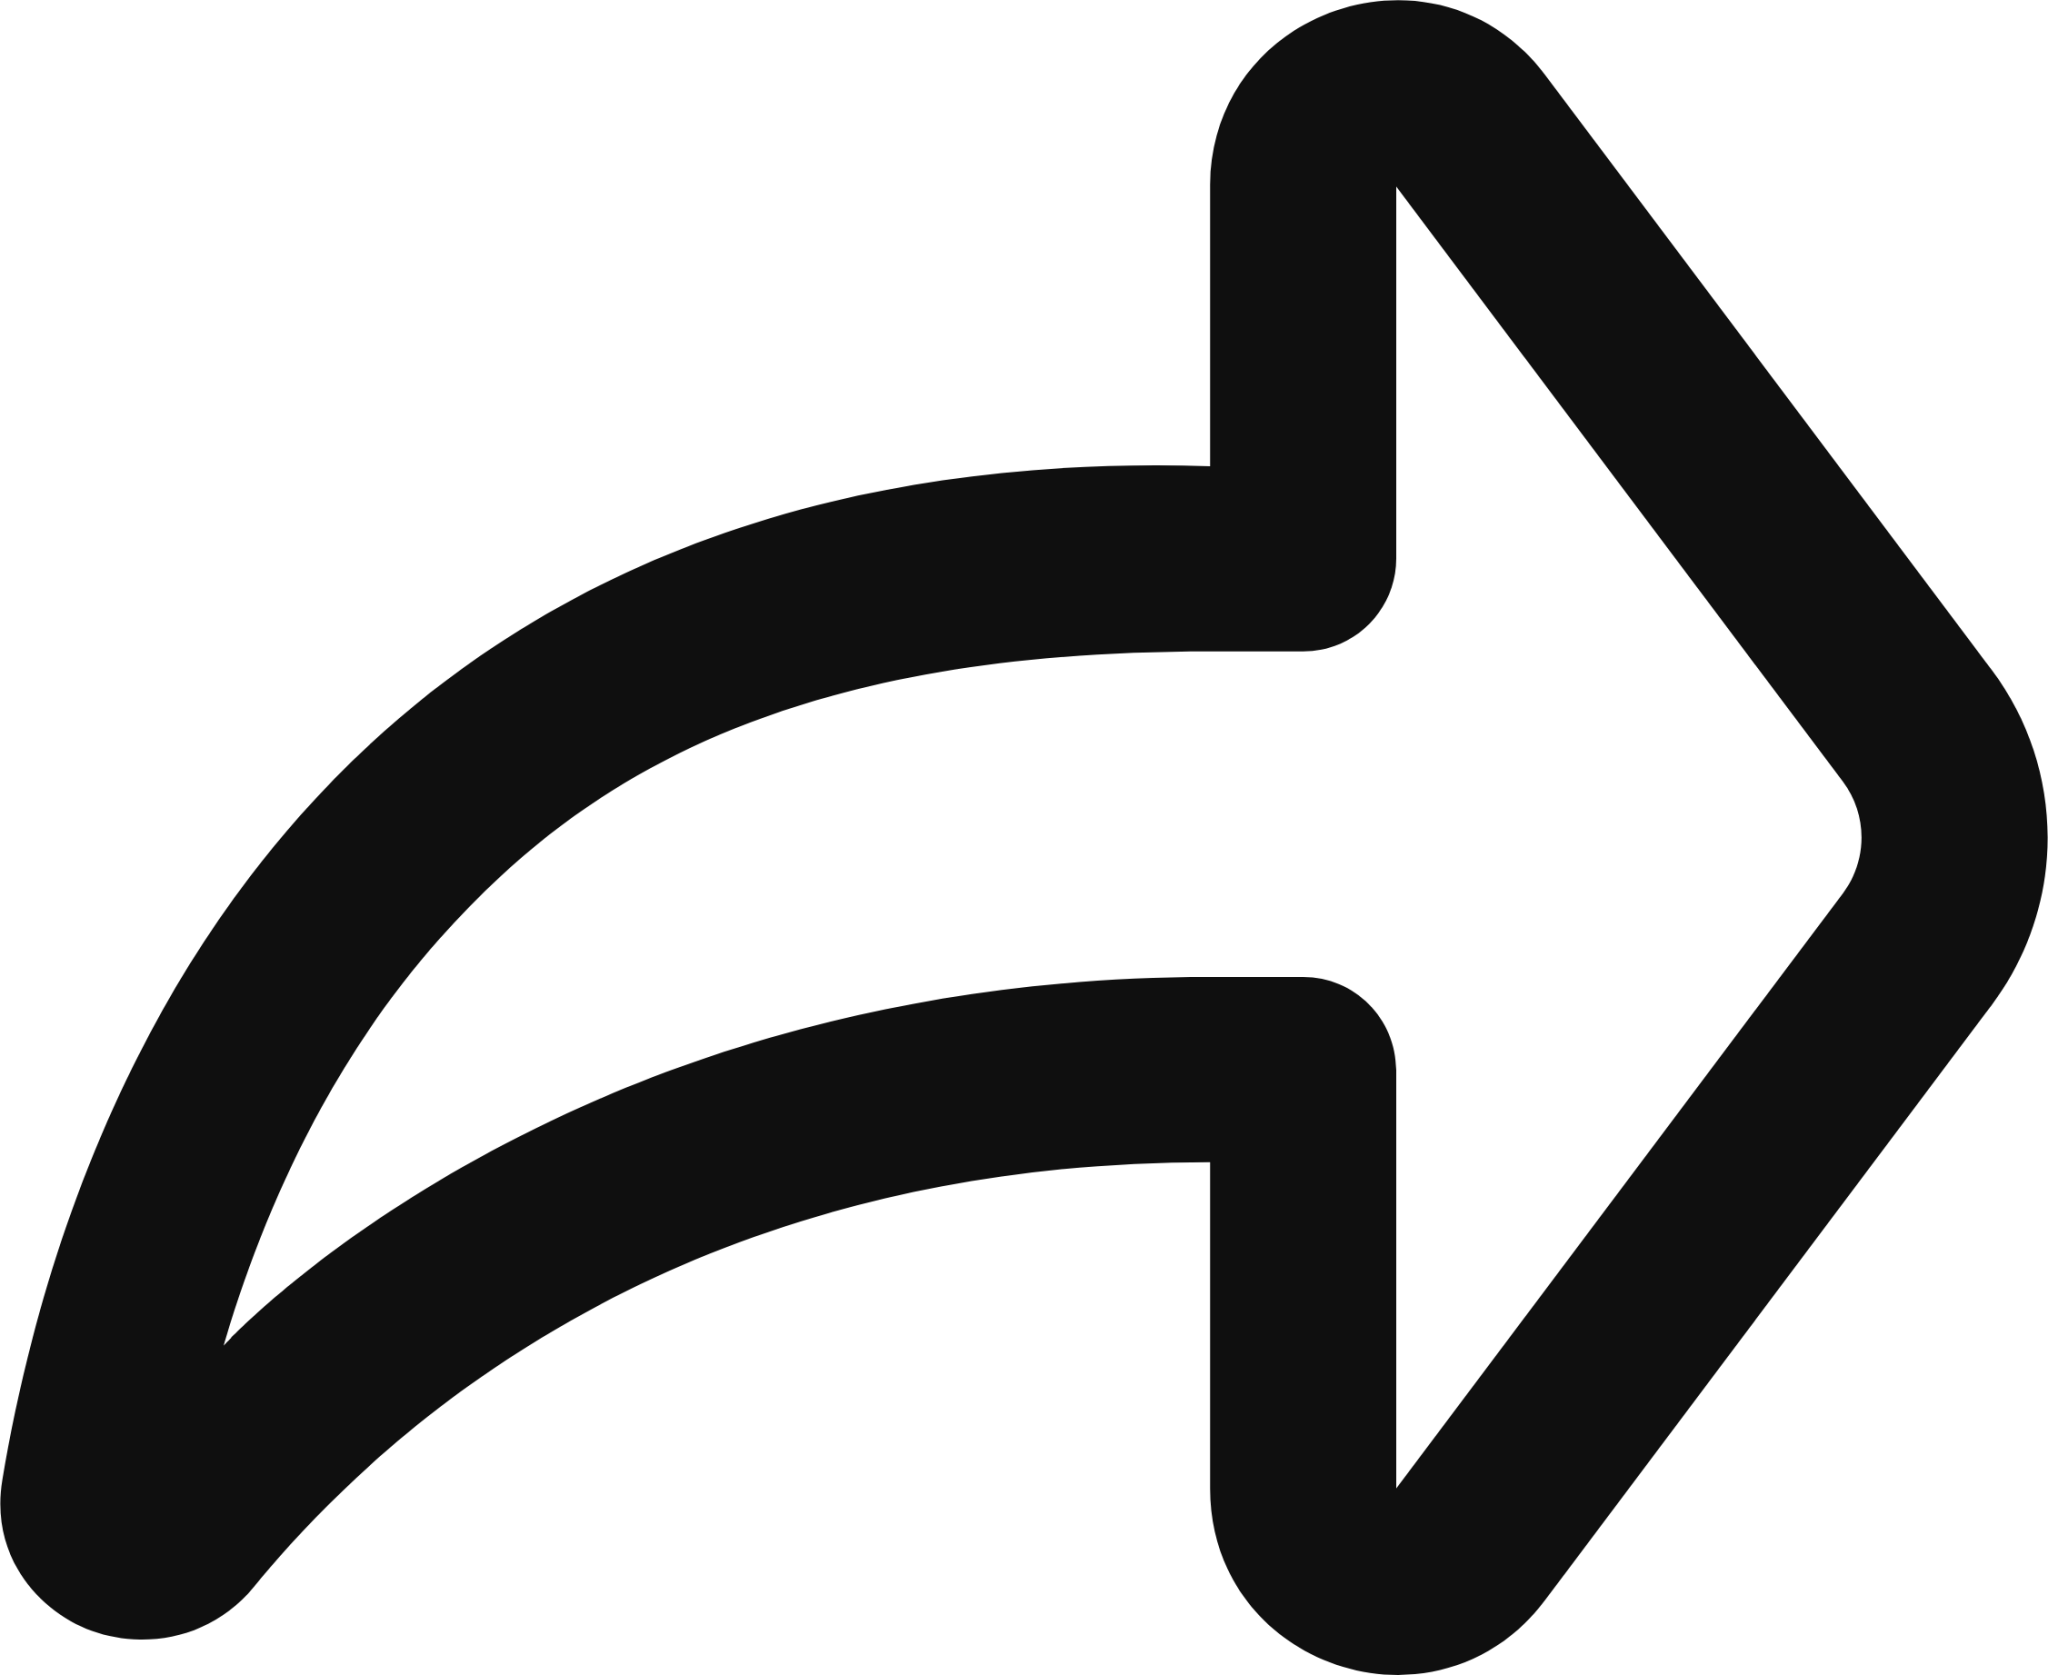 forward icon